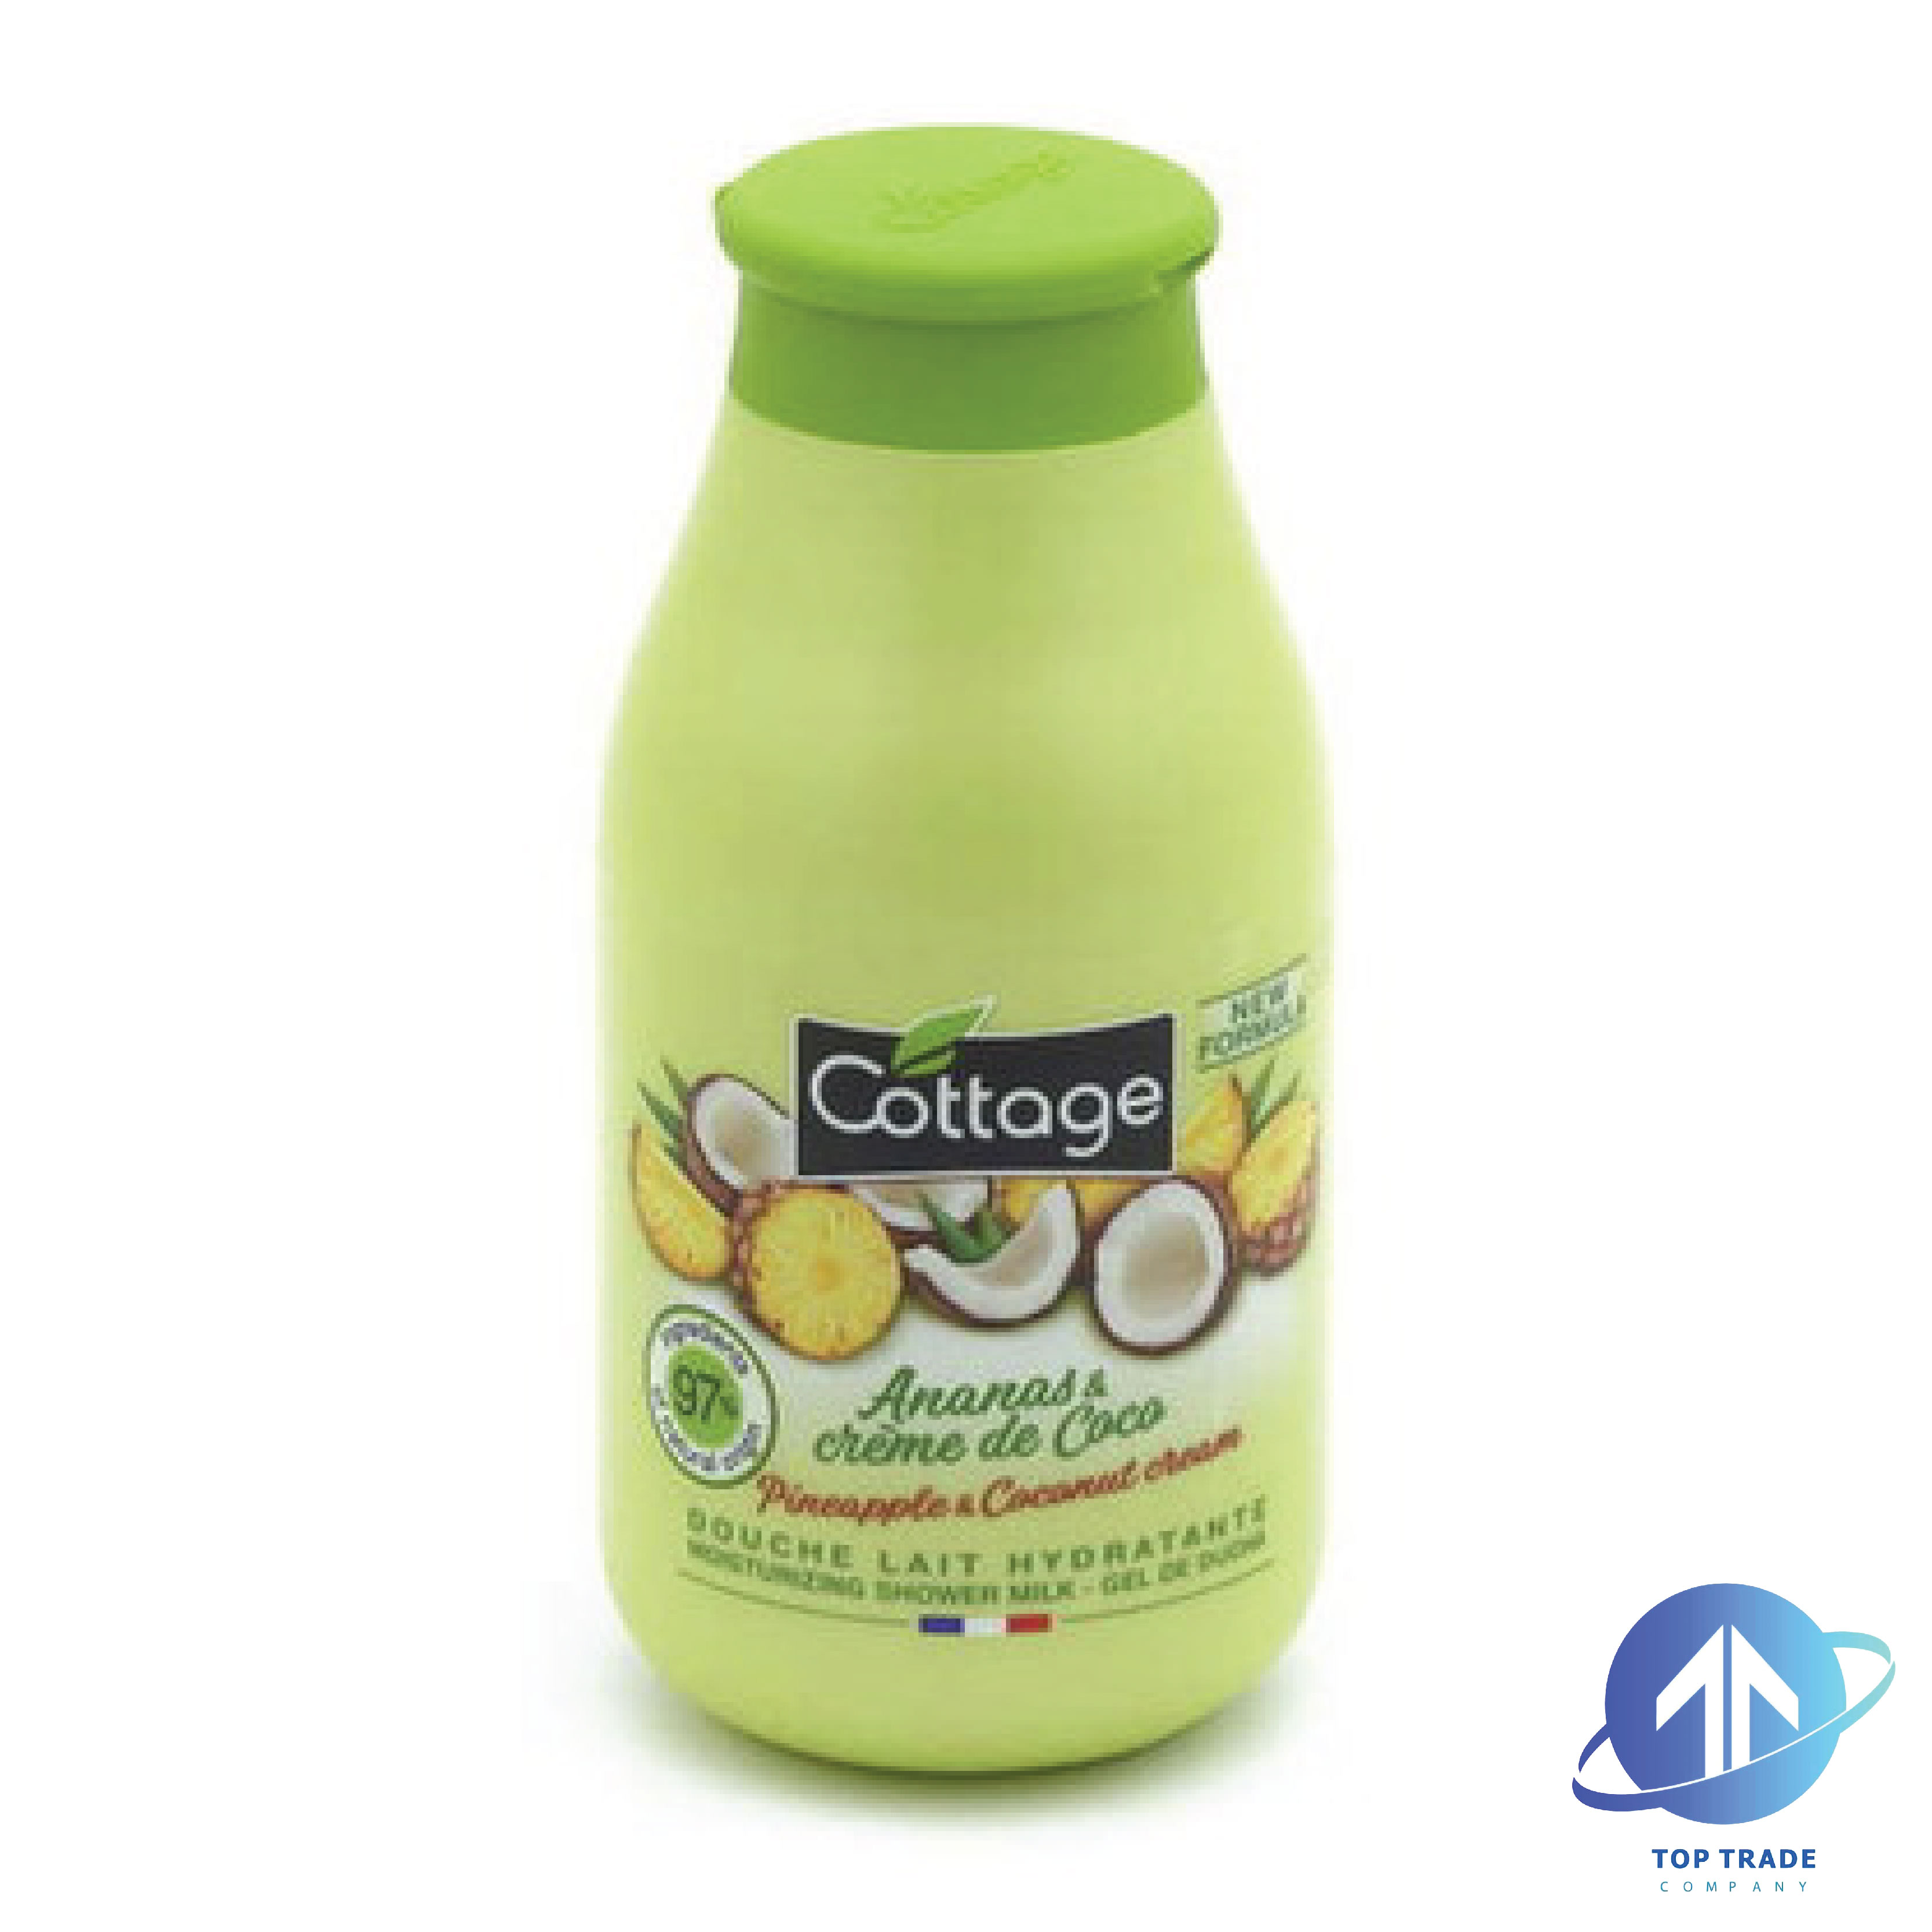 Cottage shower milk Pineapple & Coconut Cream Arabic label 250ml